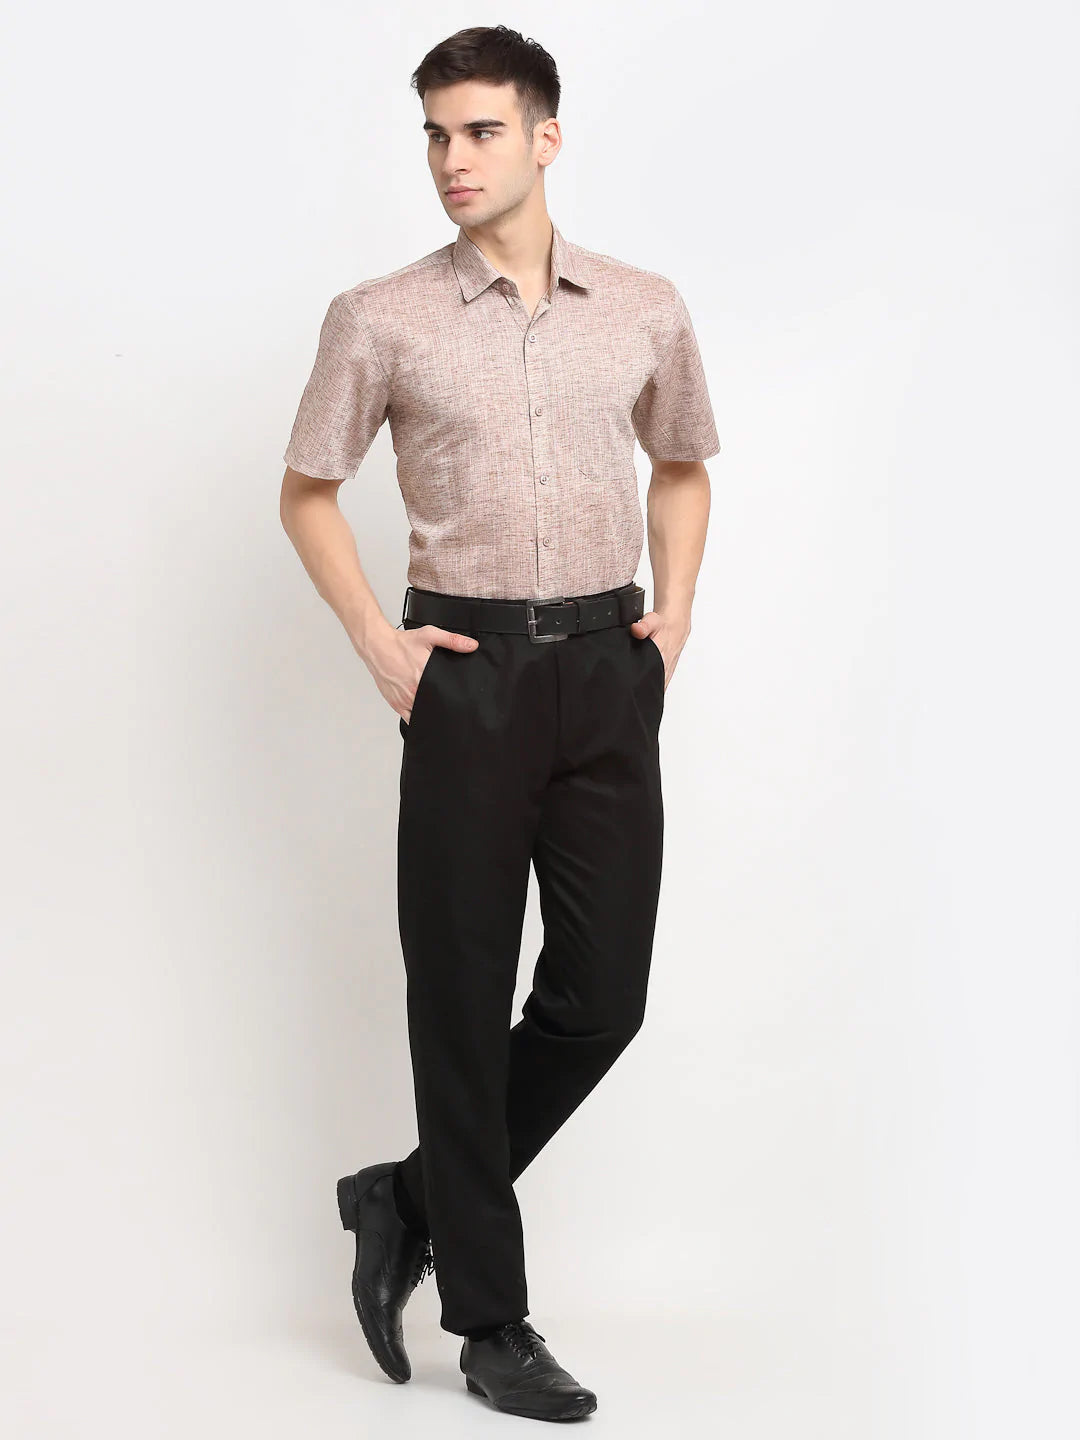 Jainish Rust Men's Solid Cotton Half Sleeves Formal Shirt ( SF 783Rust )